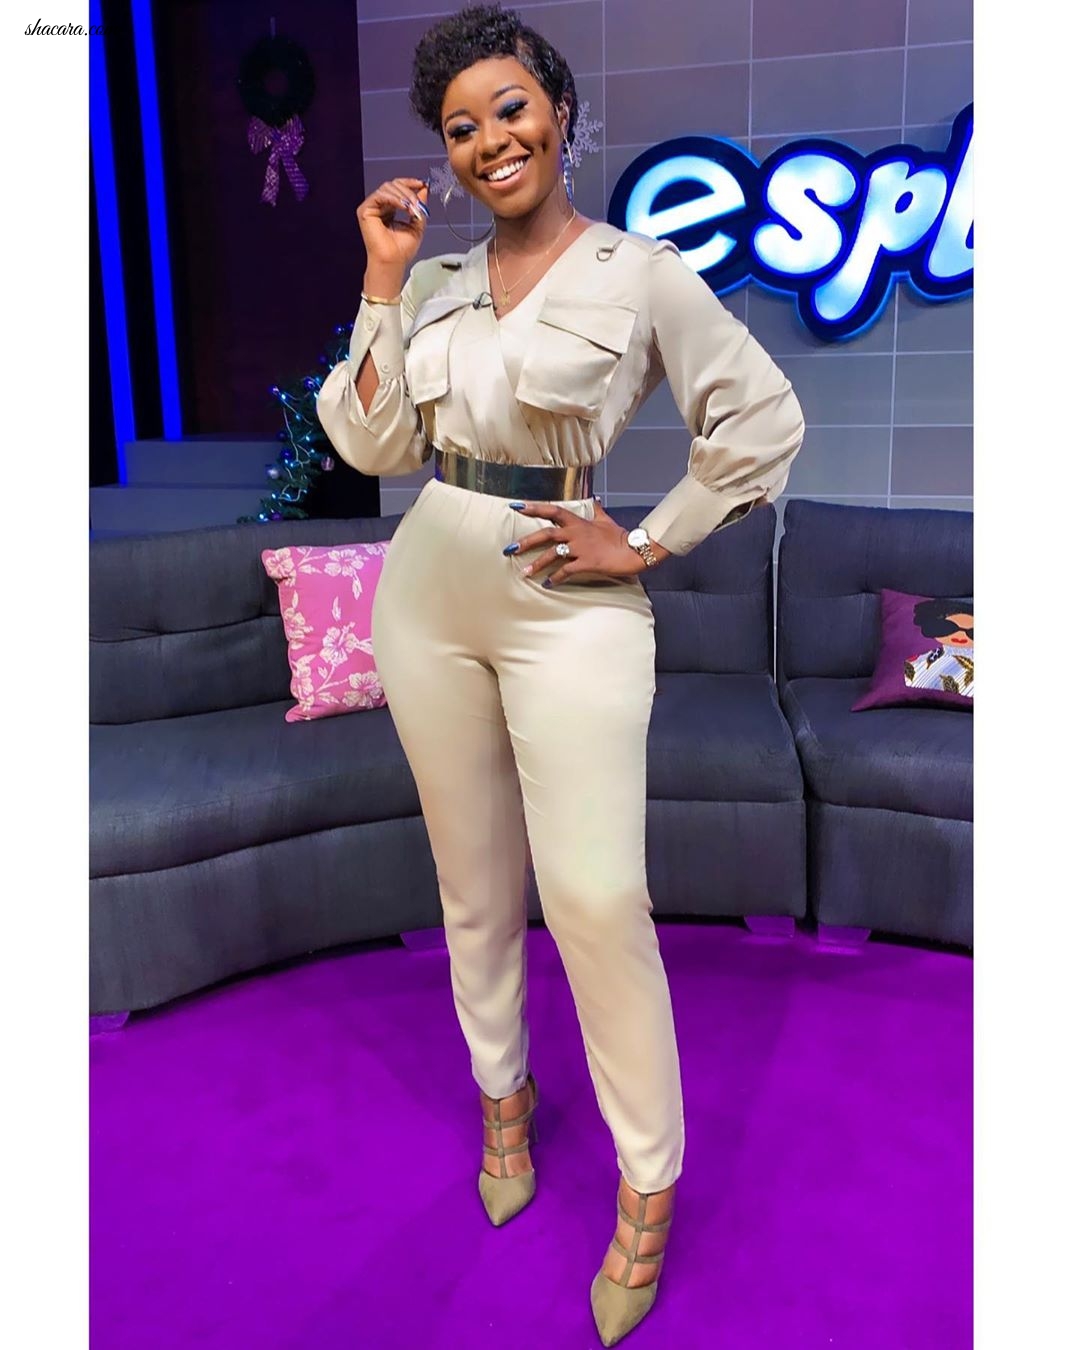 TV Host And Actor, Ariyiike “Ariyiikedimples” Owolagba